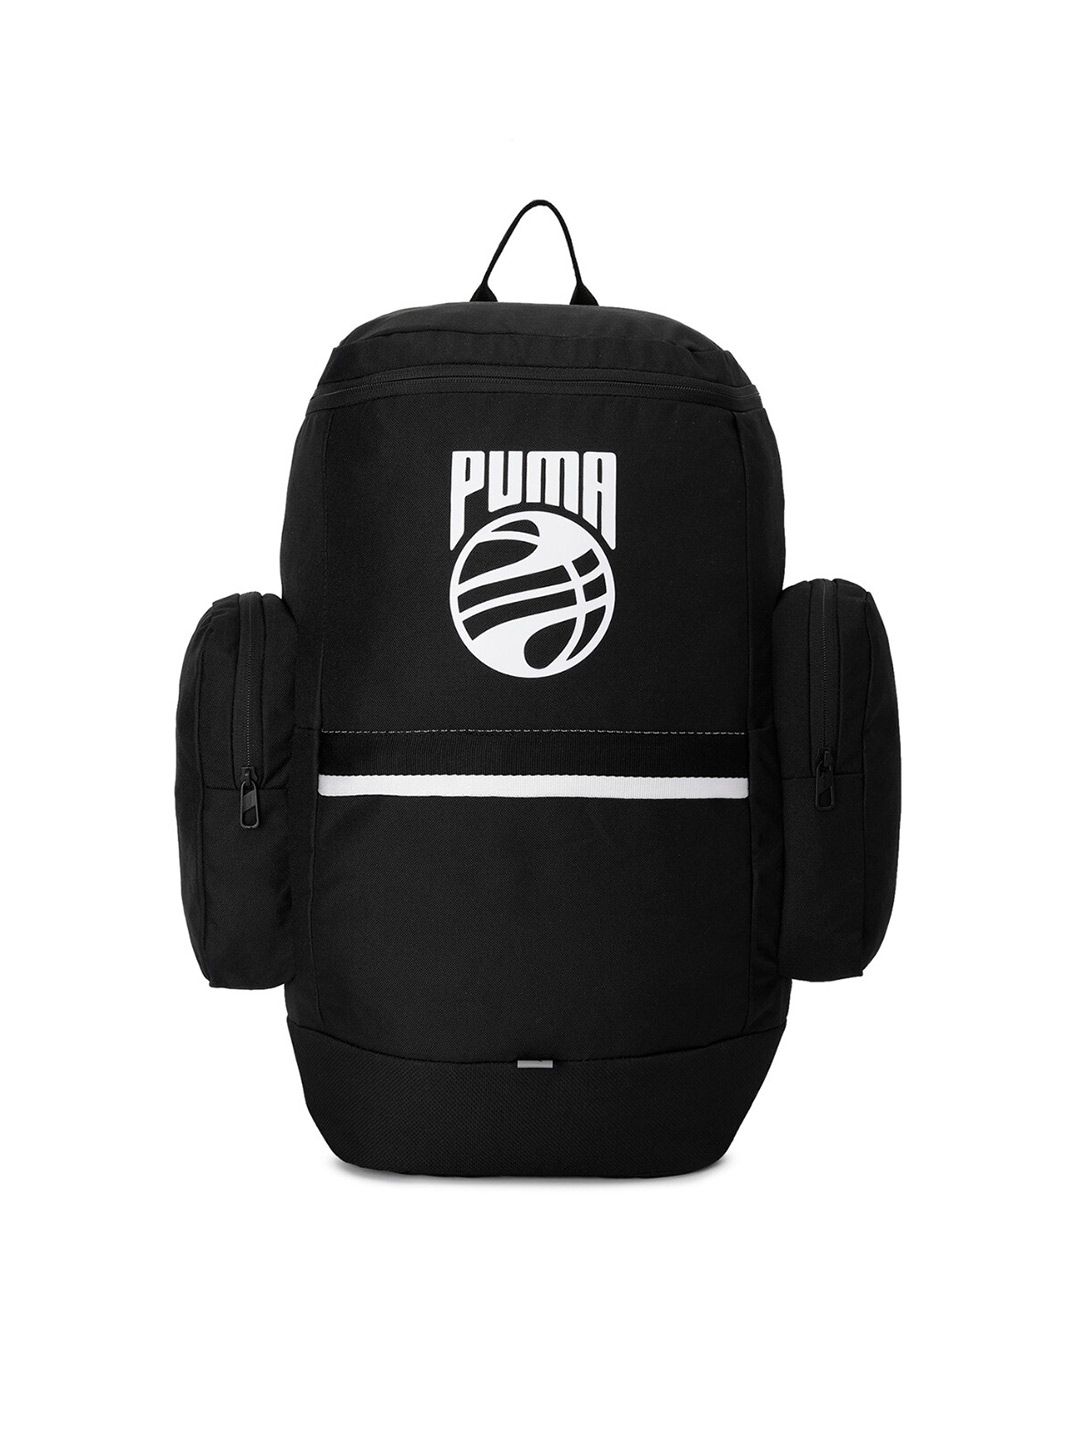 Puma Unisex Black & White Brand Logo Backpack Price in India